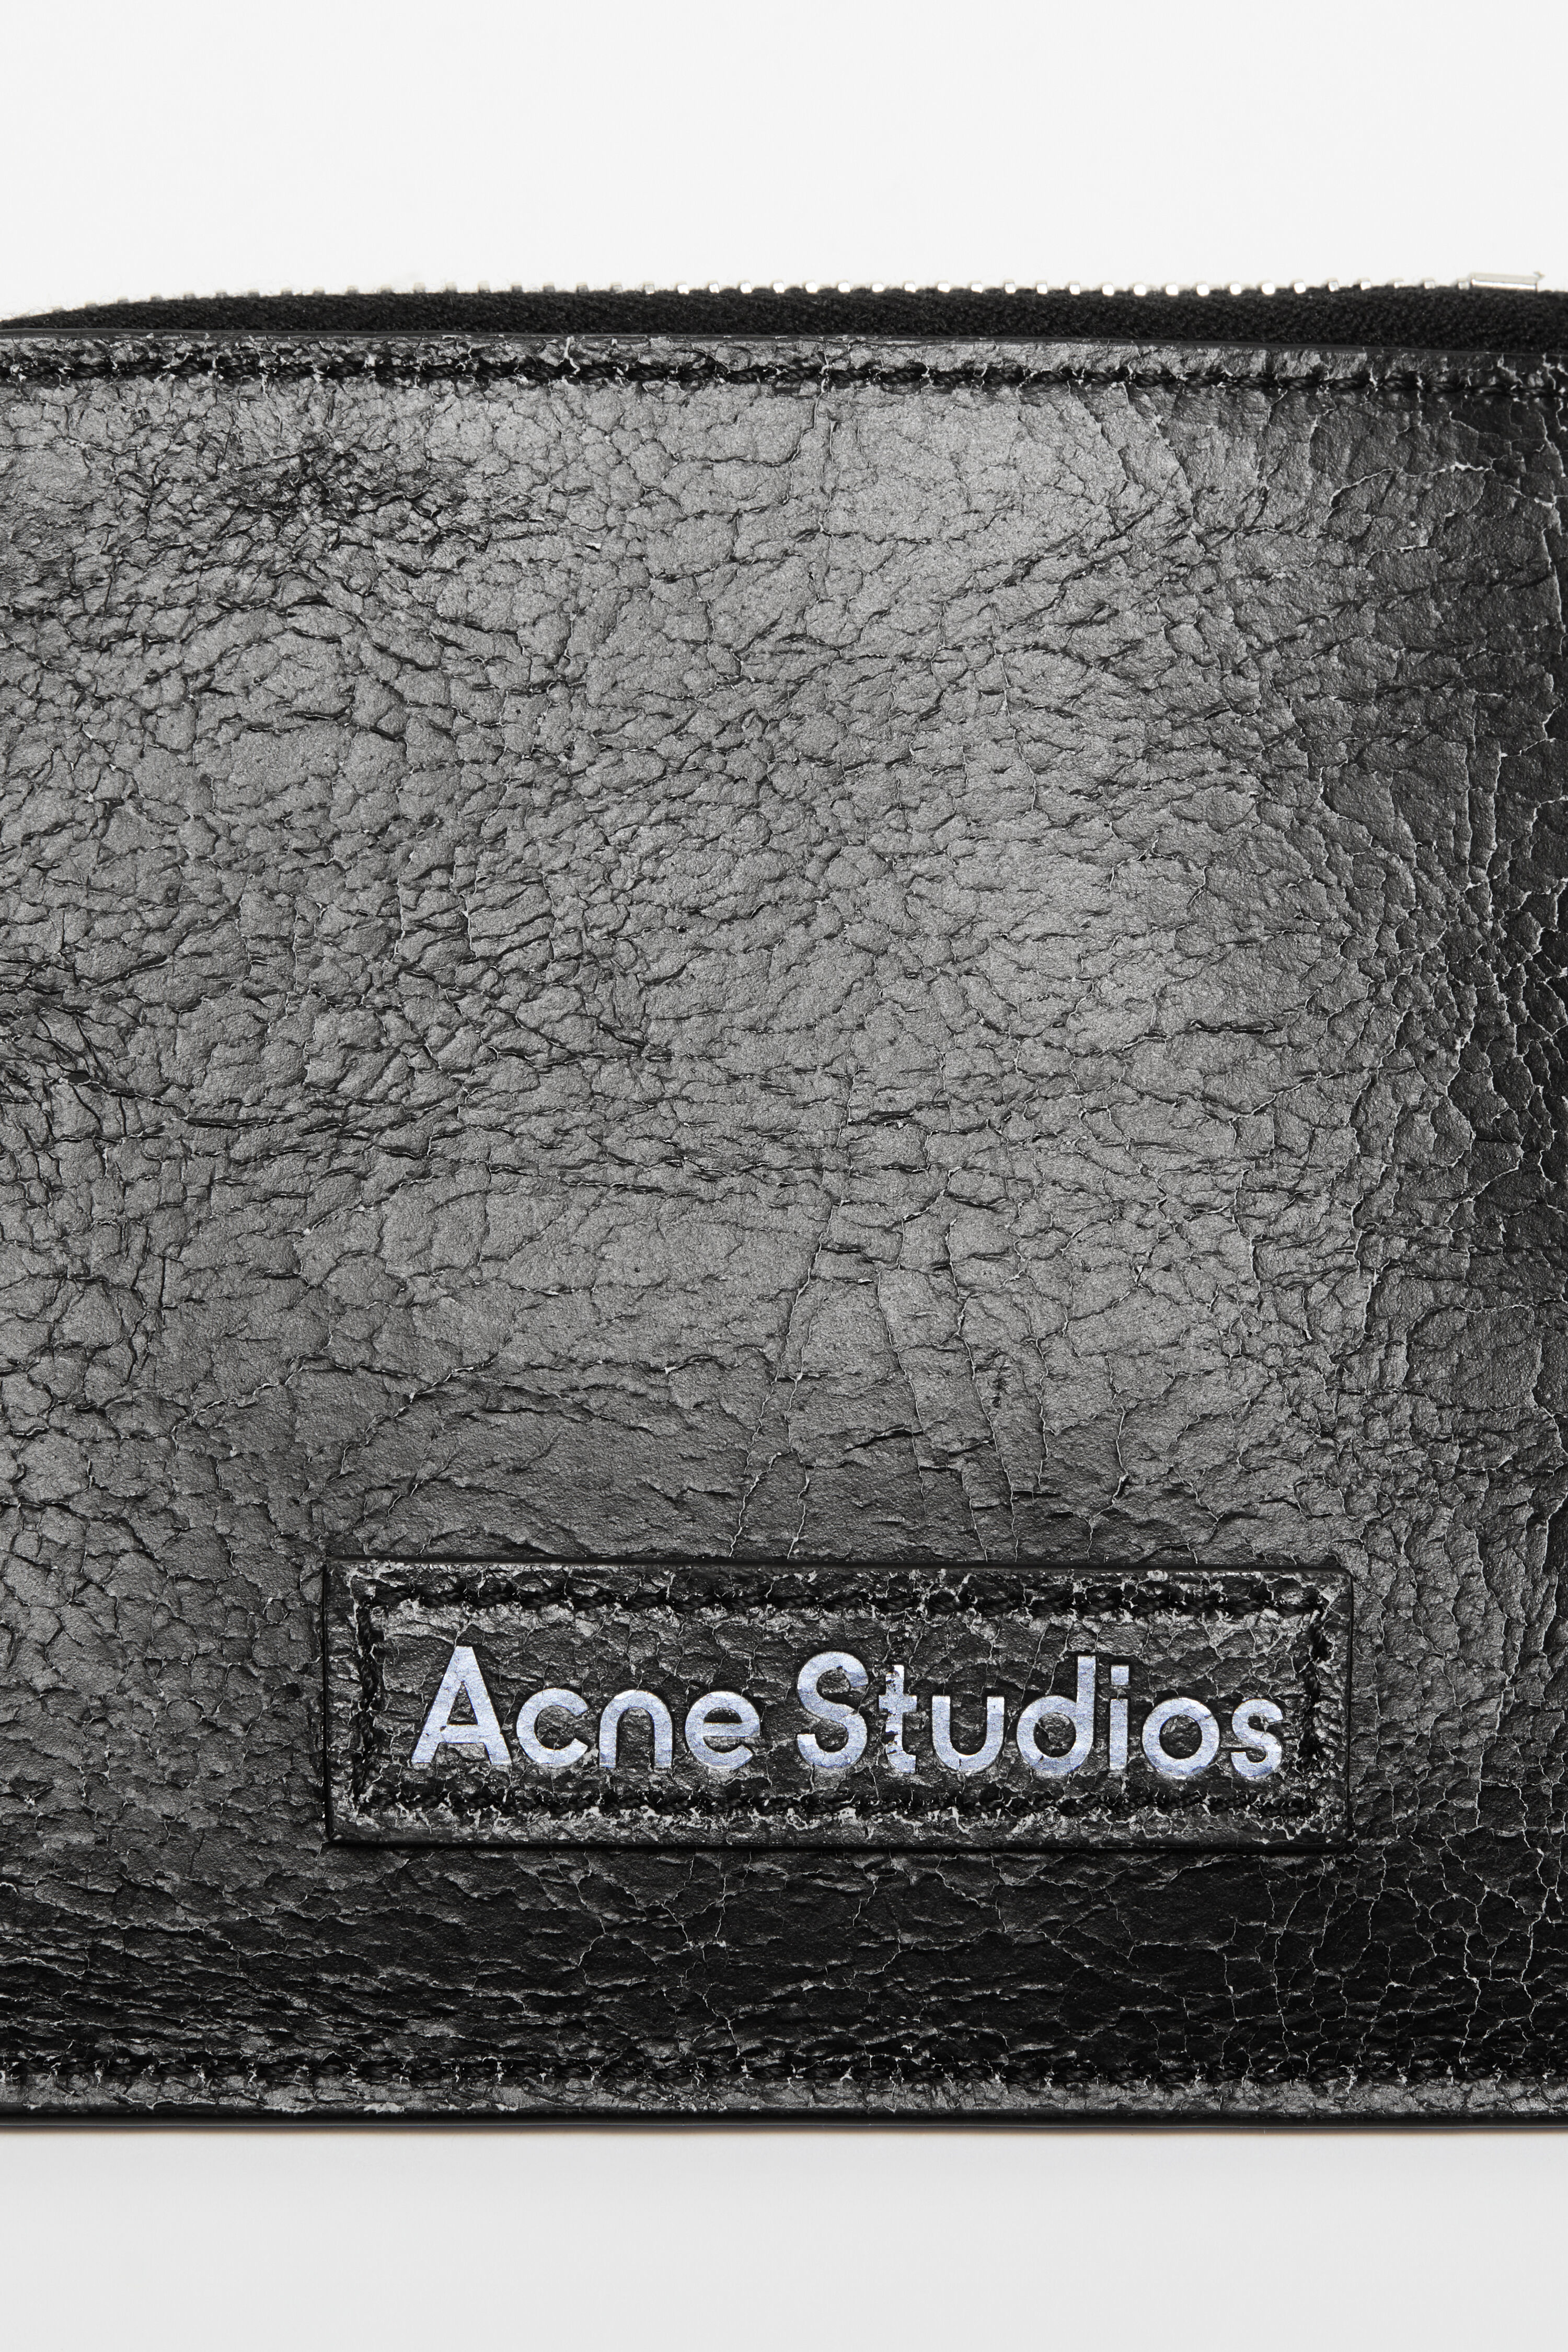 Acne Studios - ジップレザーウォレット - ブラック